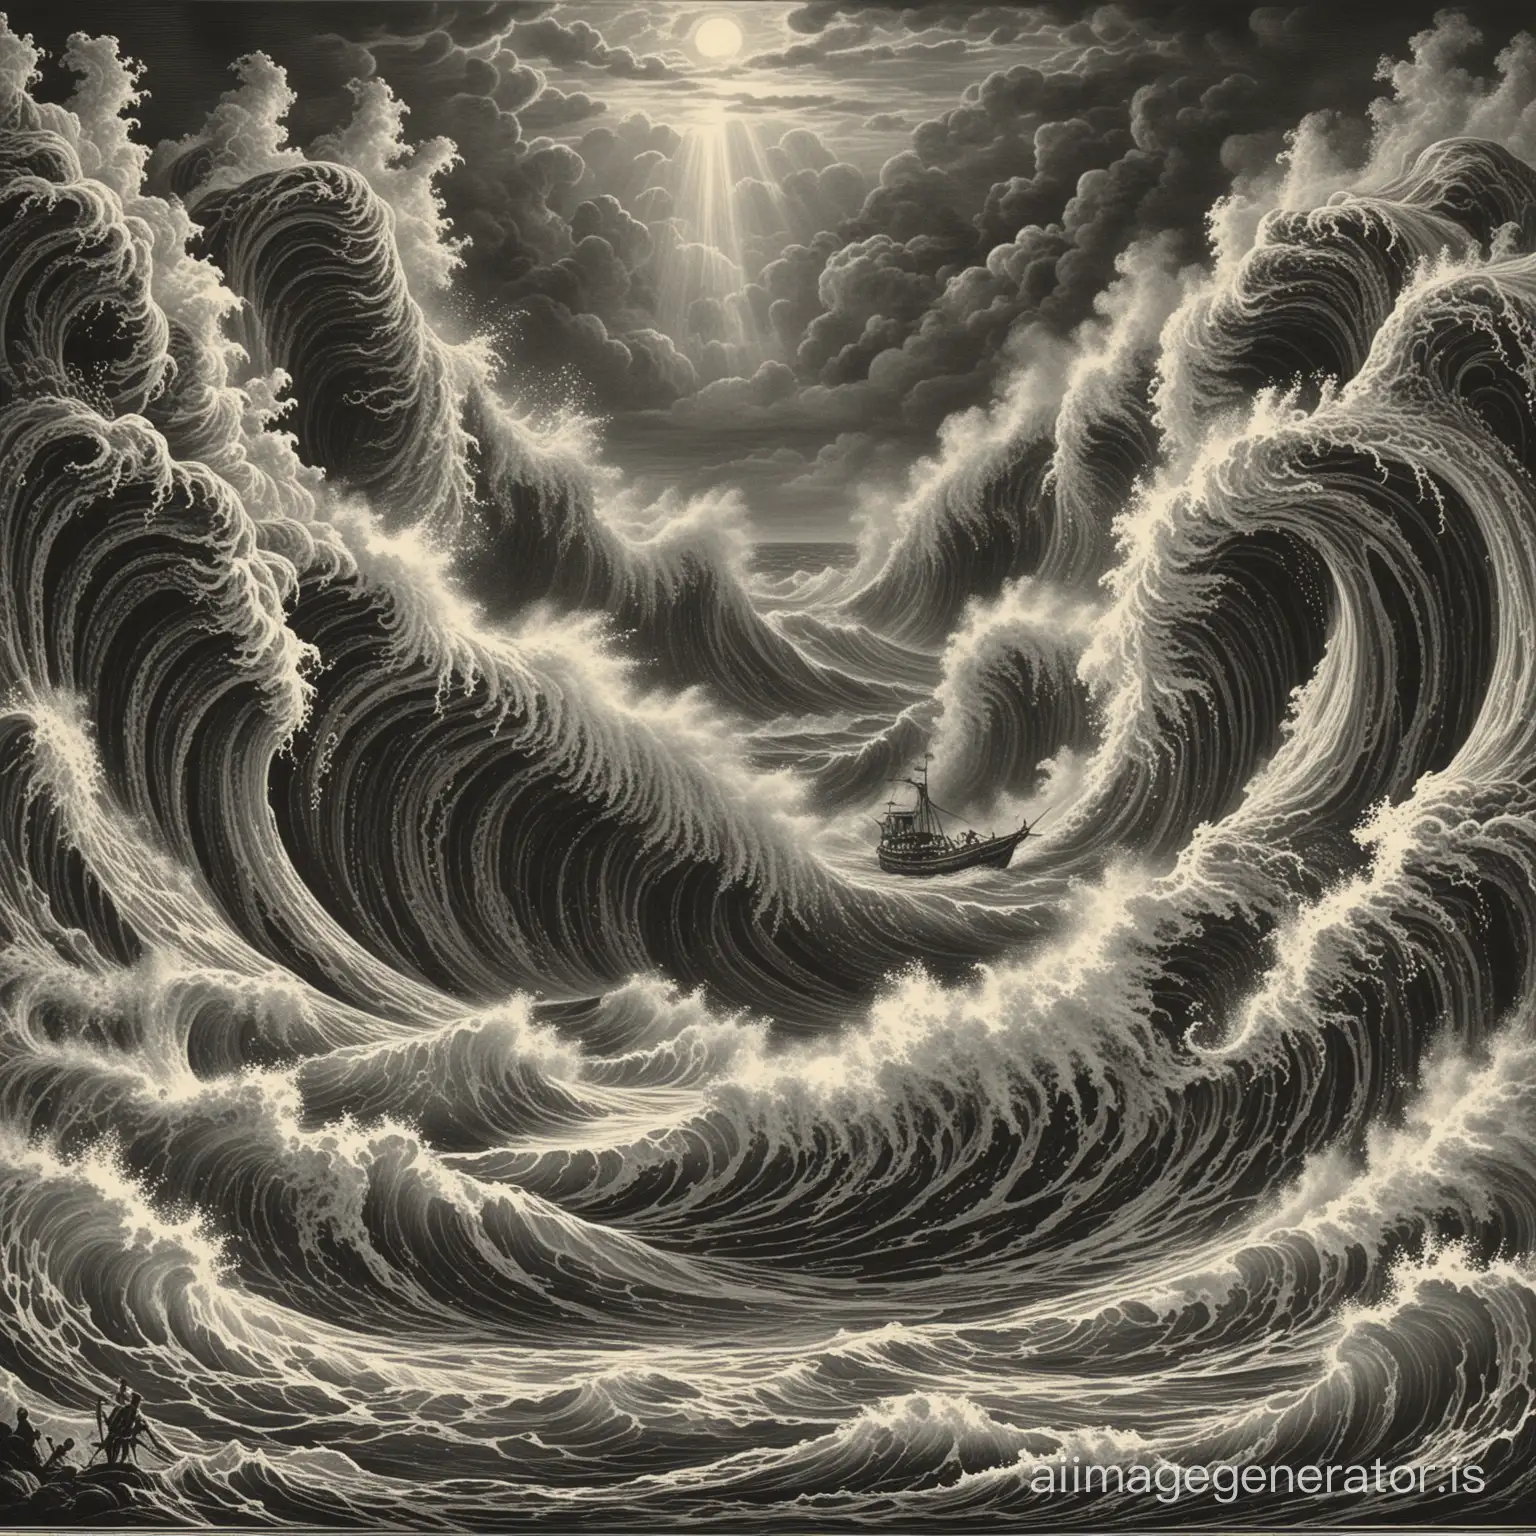 tentacles of Cthulhu, dangerous whirlpool, shipwreck

waves, epic, element, storm

engraving, renaissance, graphics, antique atlas, dark botanical illustration